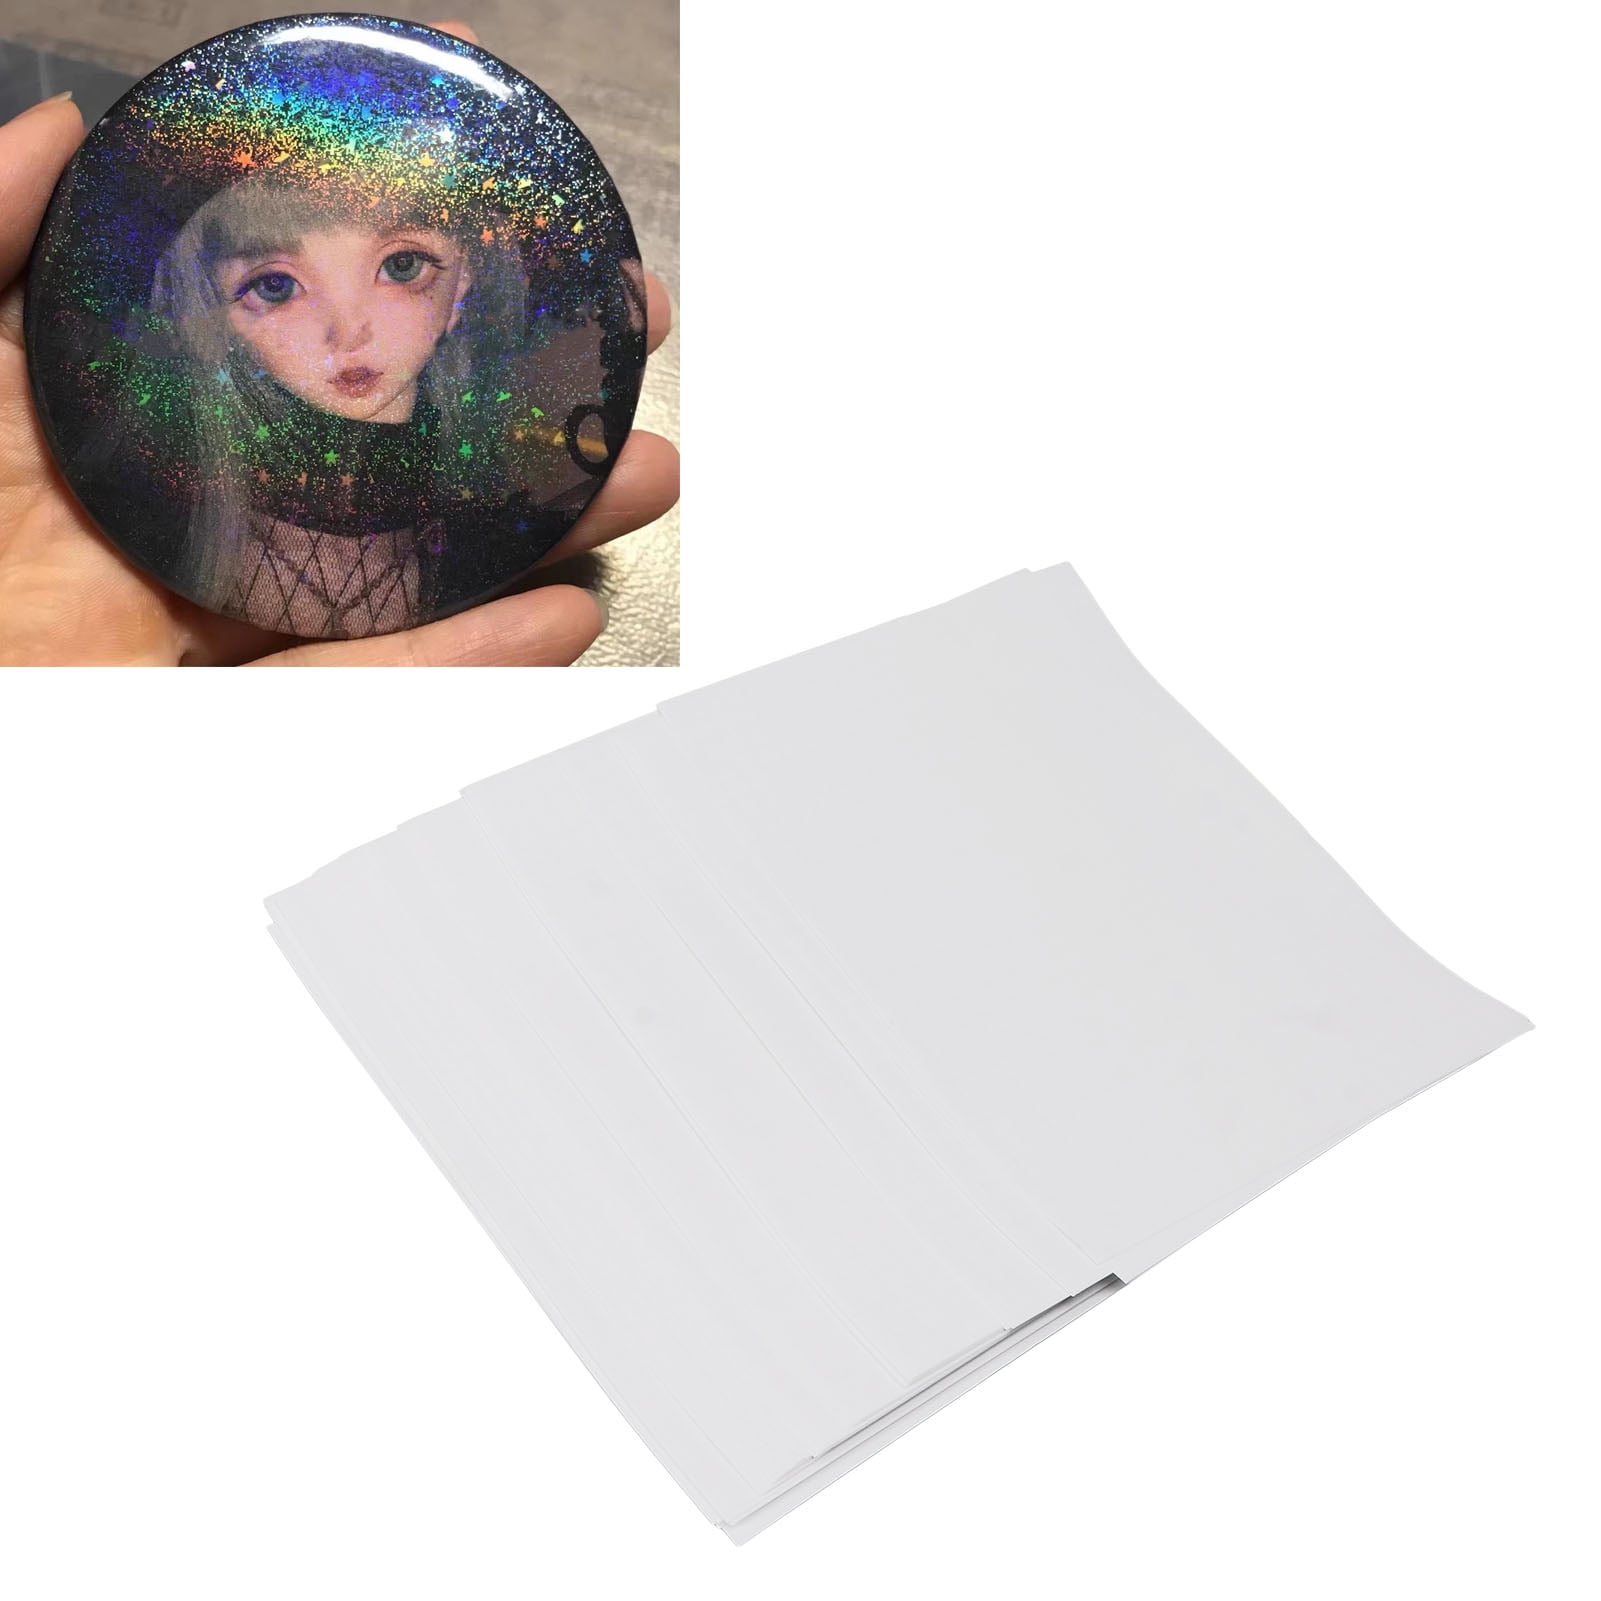 25 Sheets A4 Size Broken Diamond Glitter Holographic Cold Laminate Sheet Premium Overlay Laminating Self-Adhesive Sheets